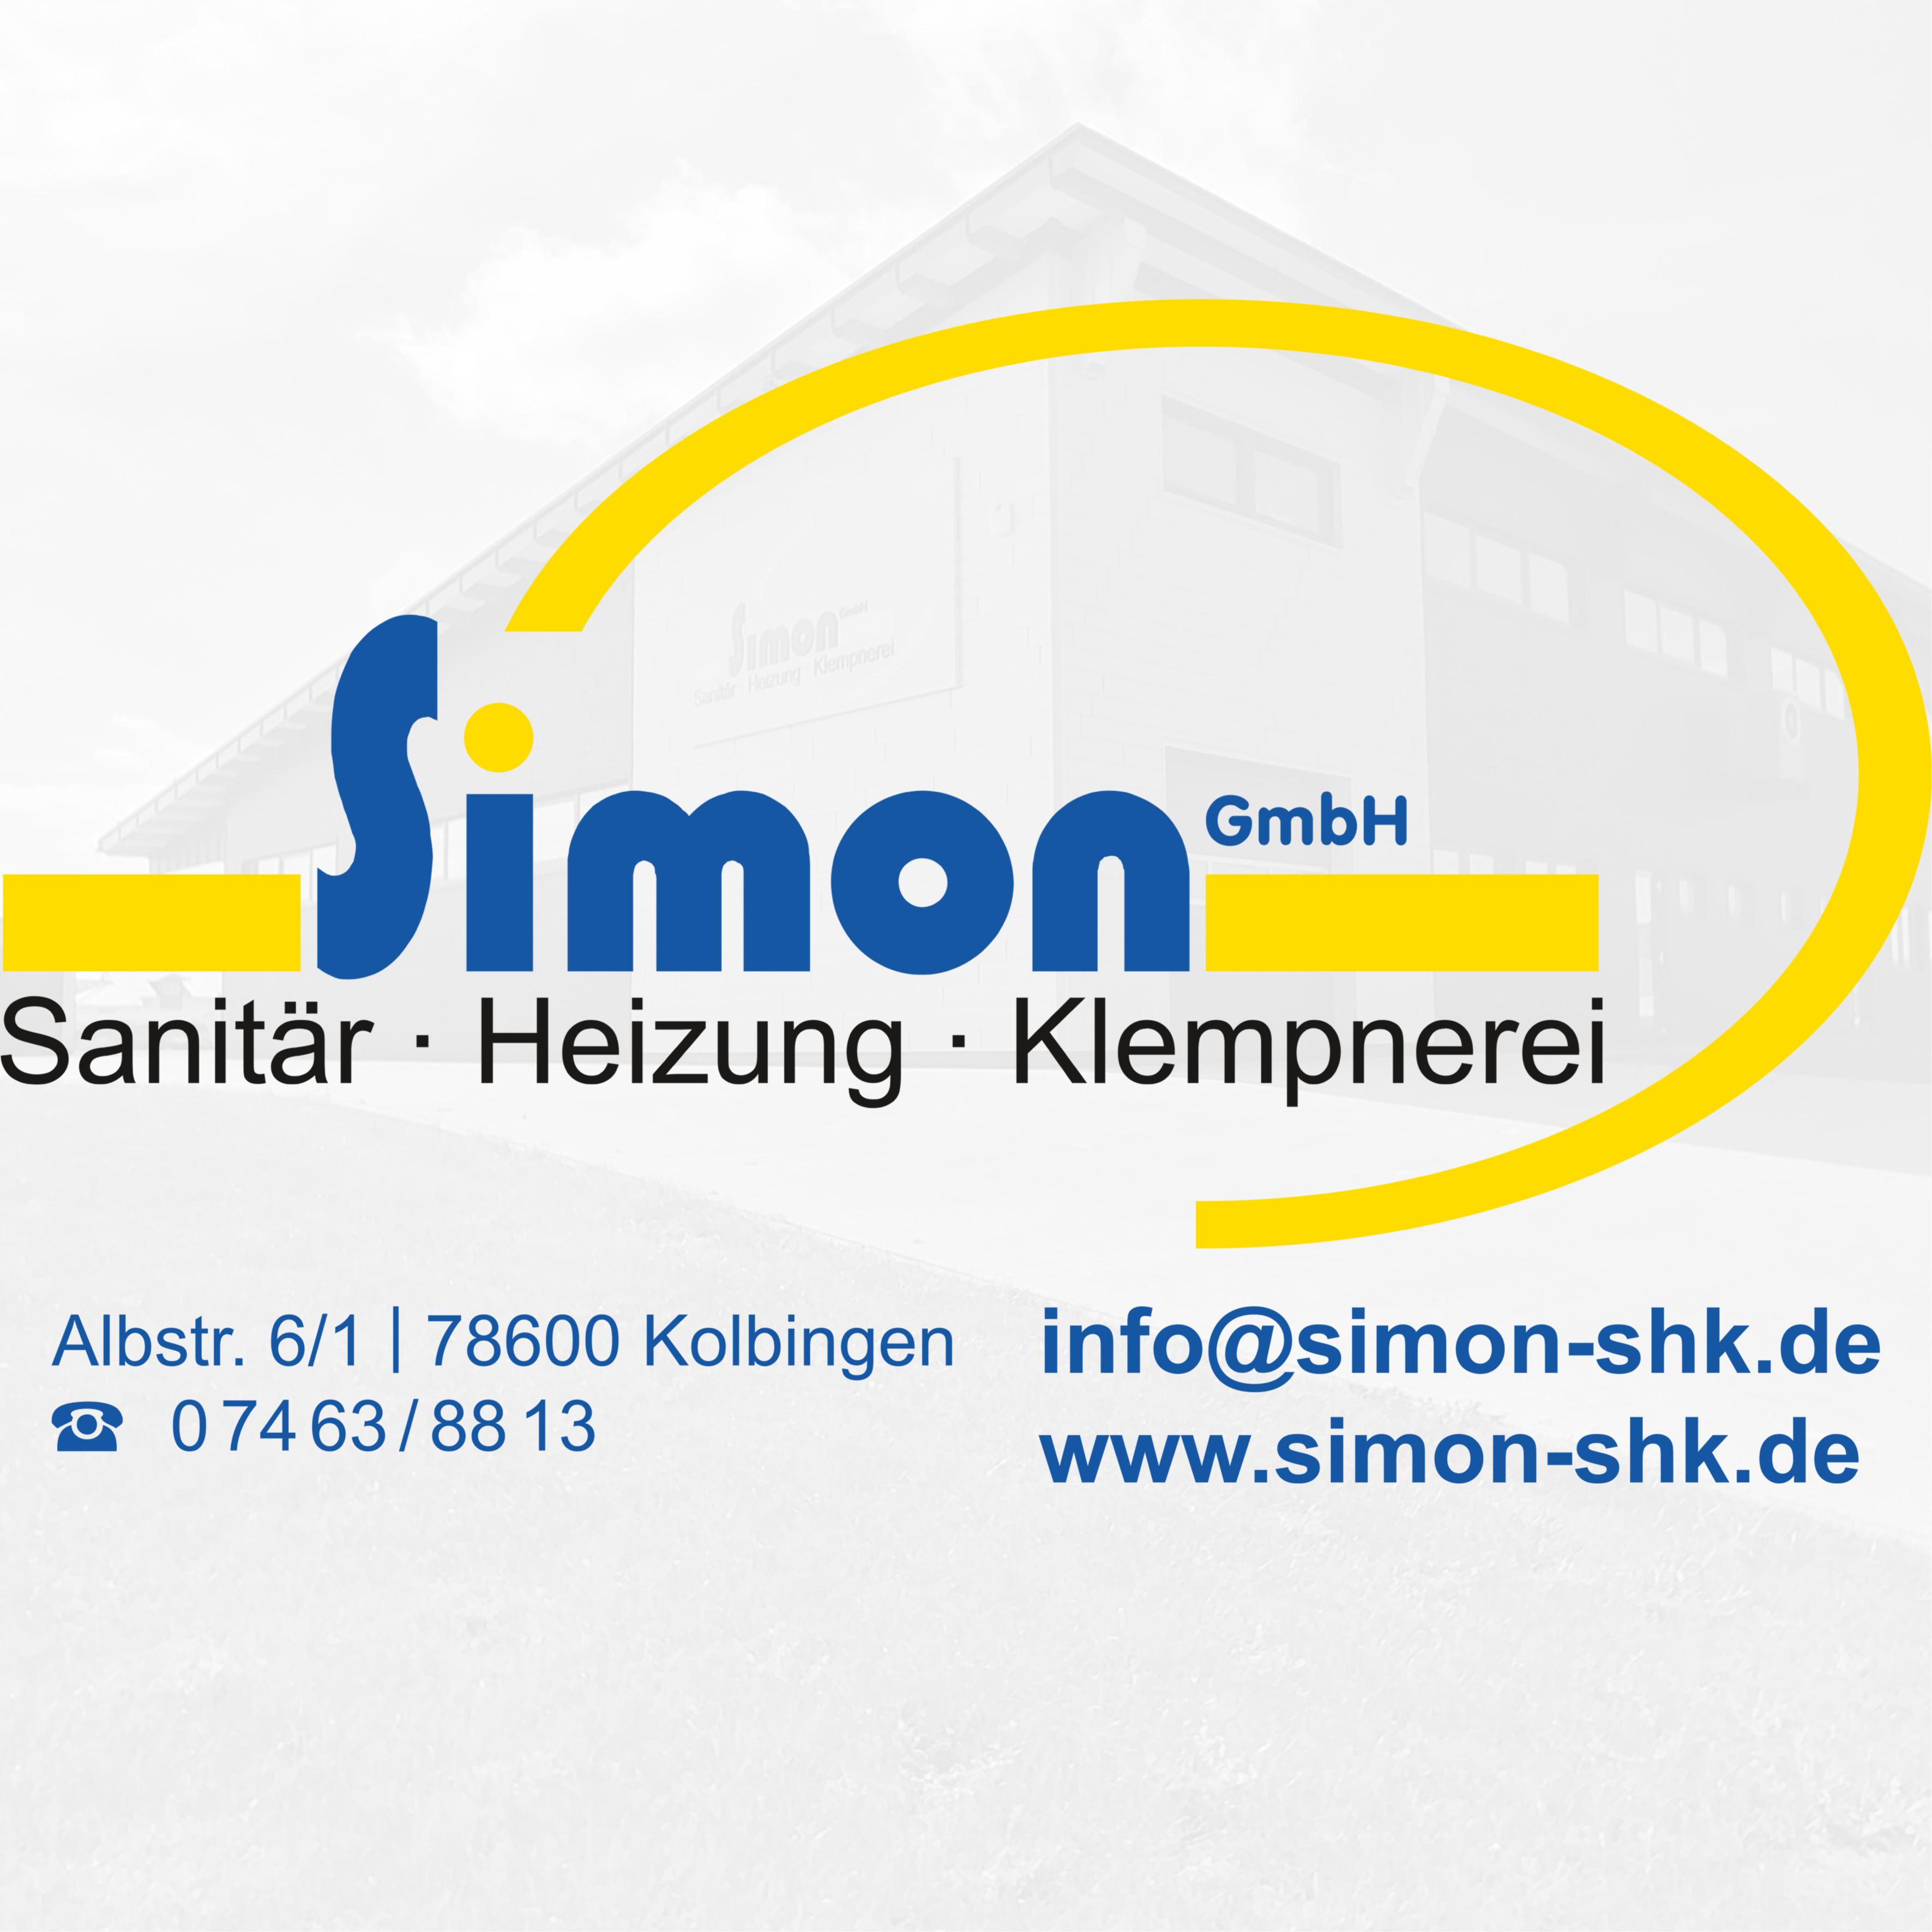 Simon GmbH - Heizung, Sanitär, Klempnerei in Kolbingen - Logo